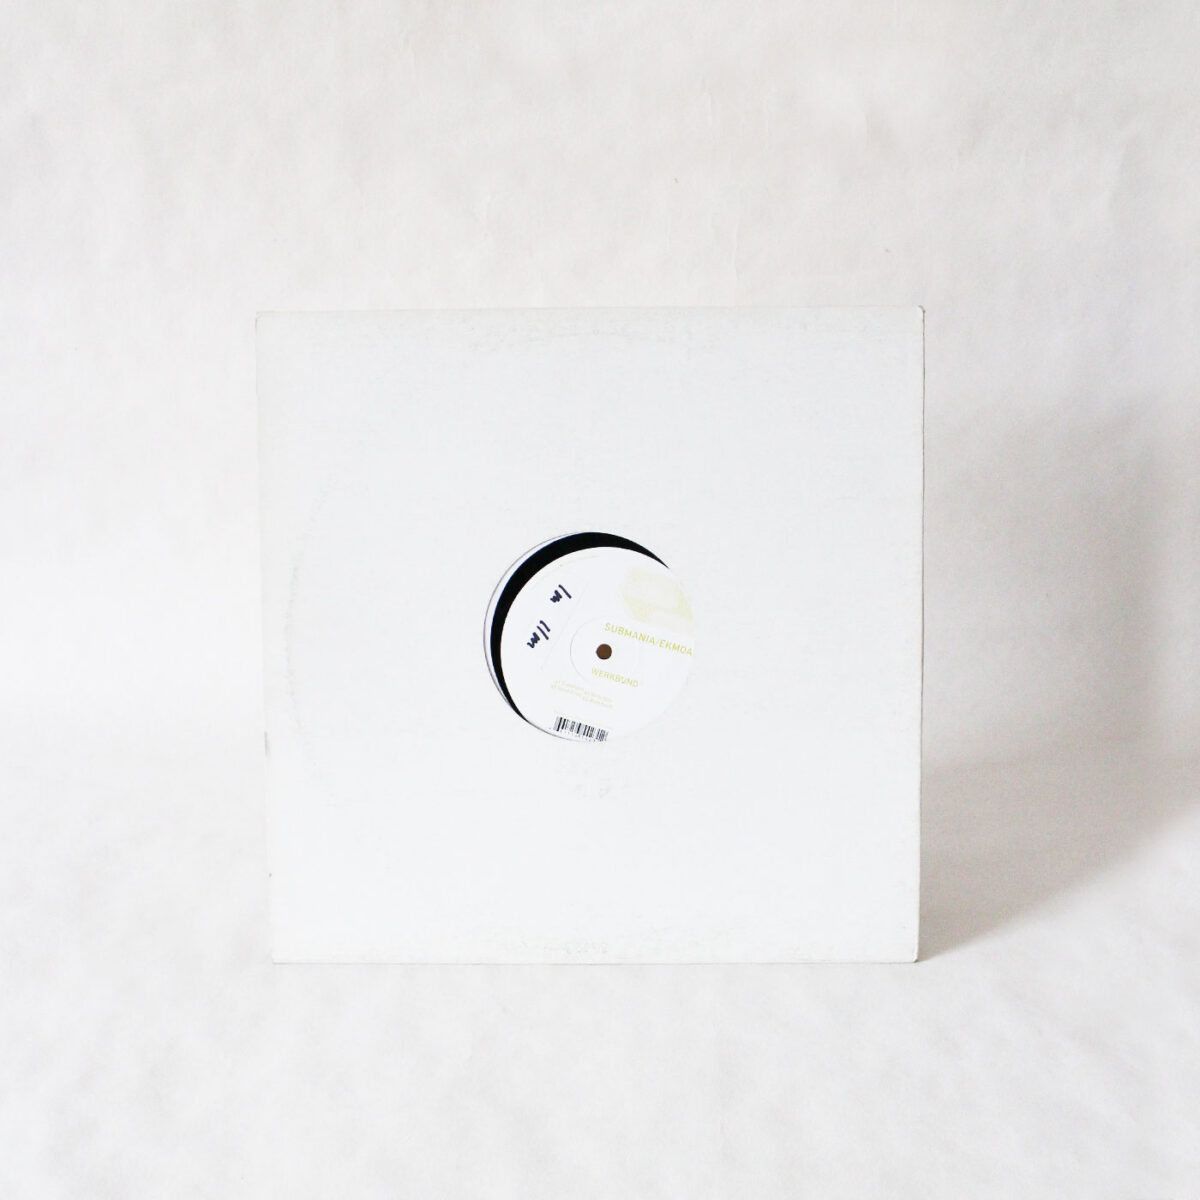 Submania & Ekmoah - Werkbund (Vinyl Second Hand) Minimal Techno Background – BG023